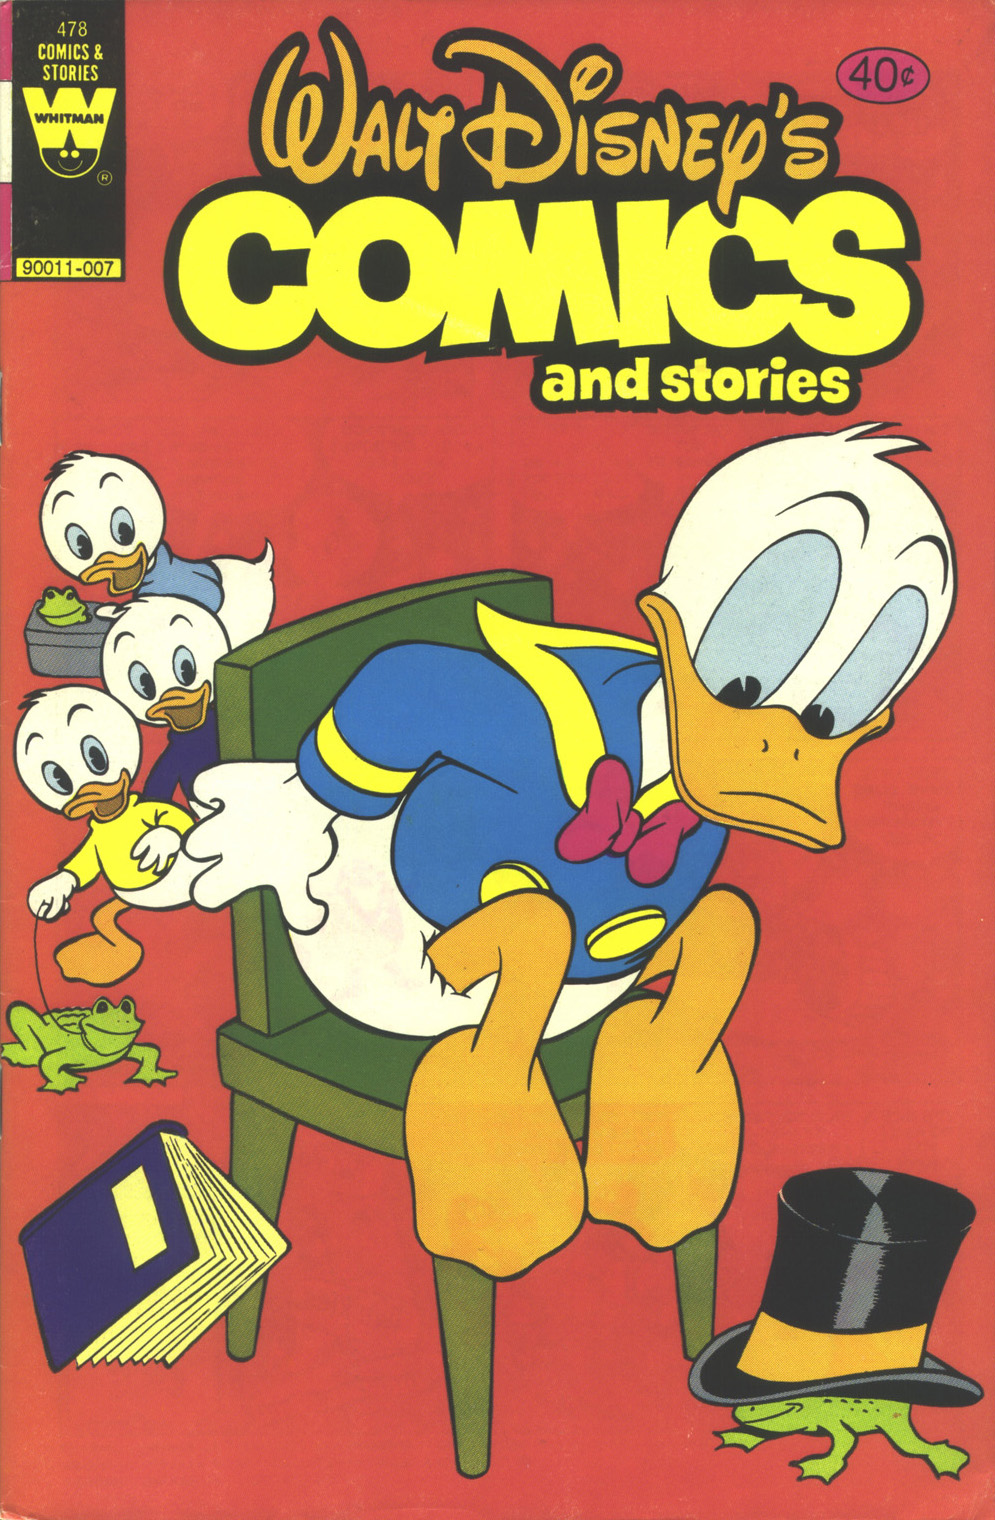 Walt Disneys Comics and Stories 478 Page 1